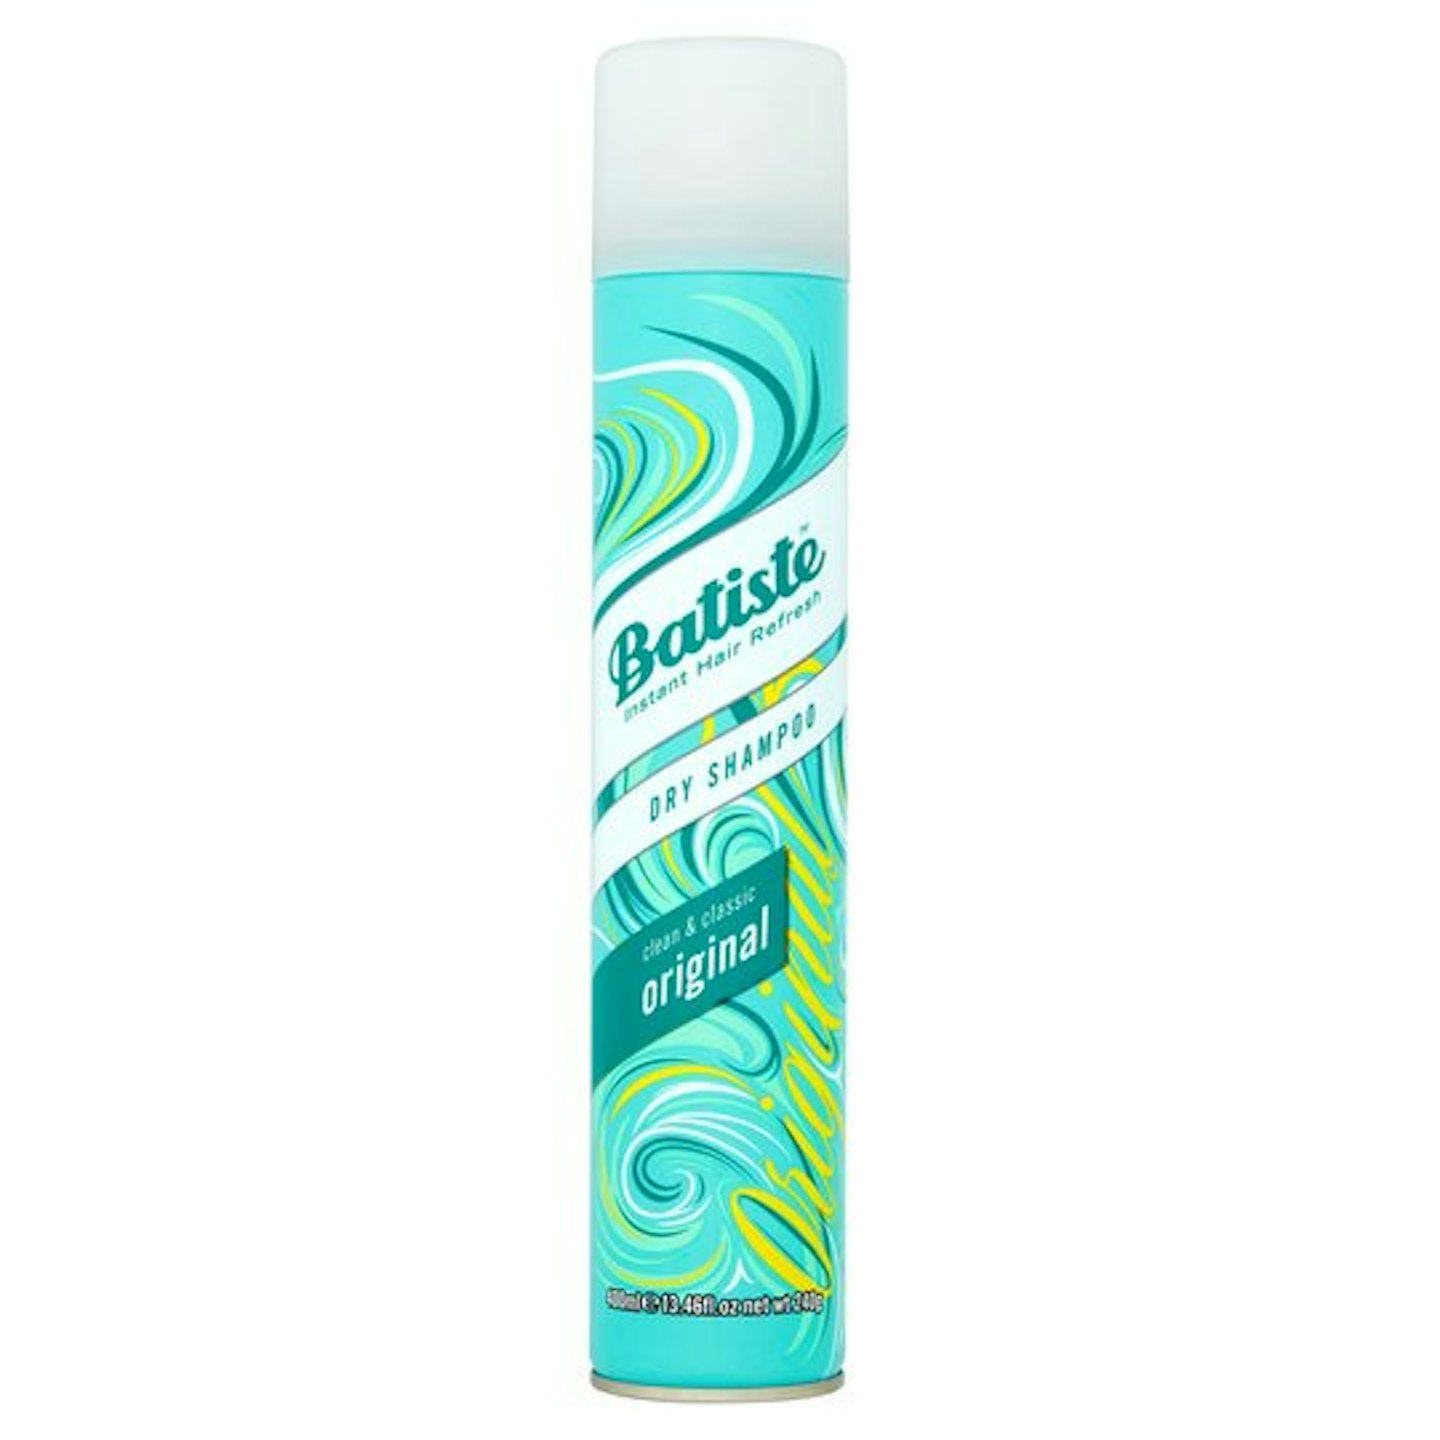 Batiste Dry Shampoo Clean & Classic Original, £4.99